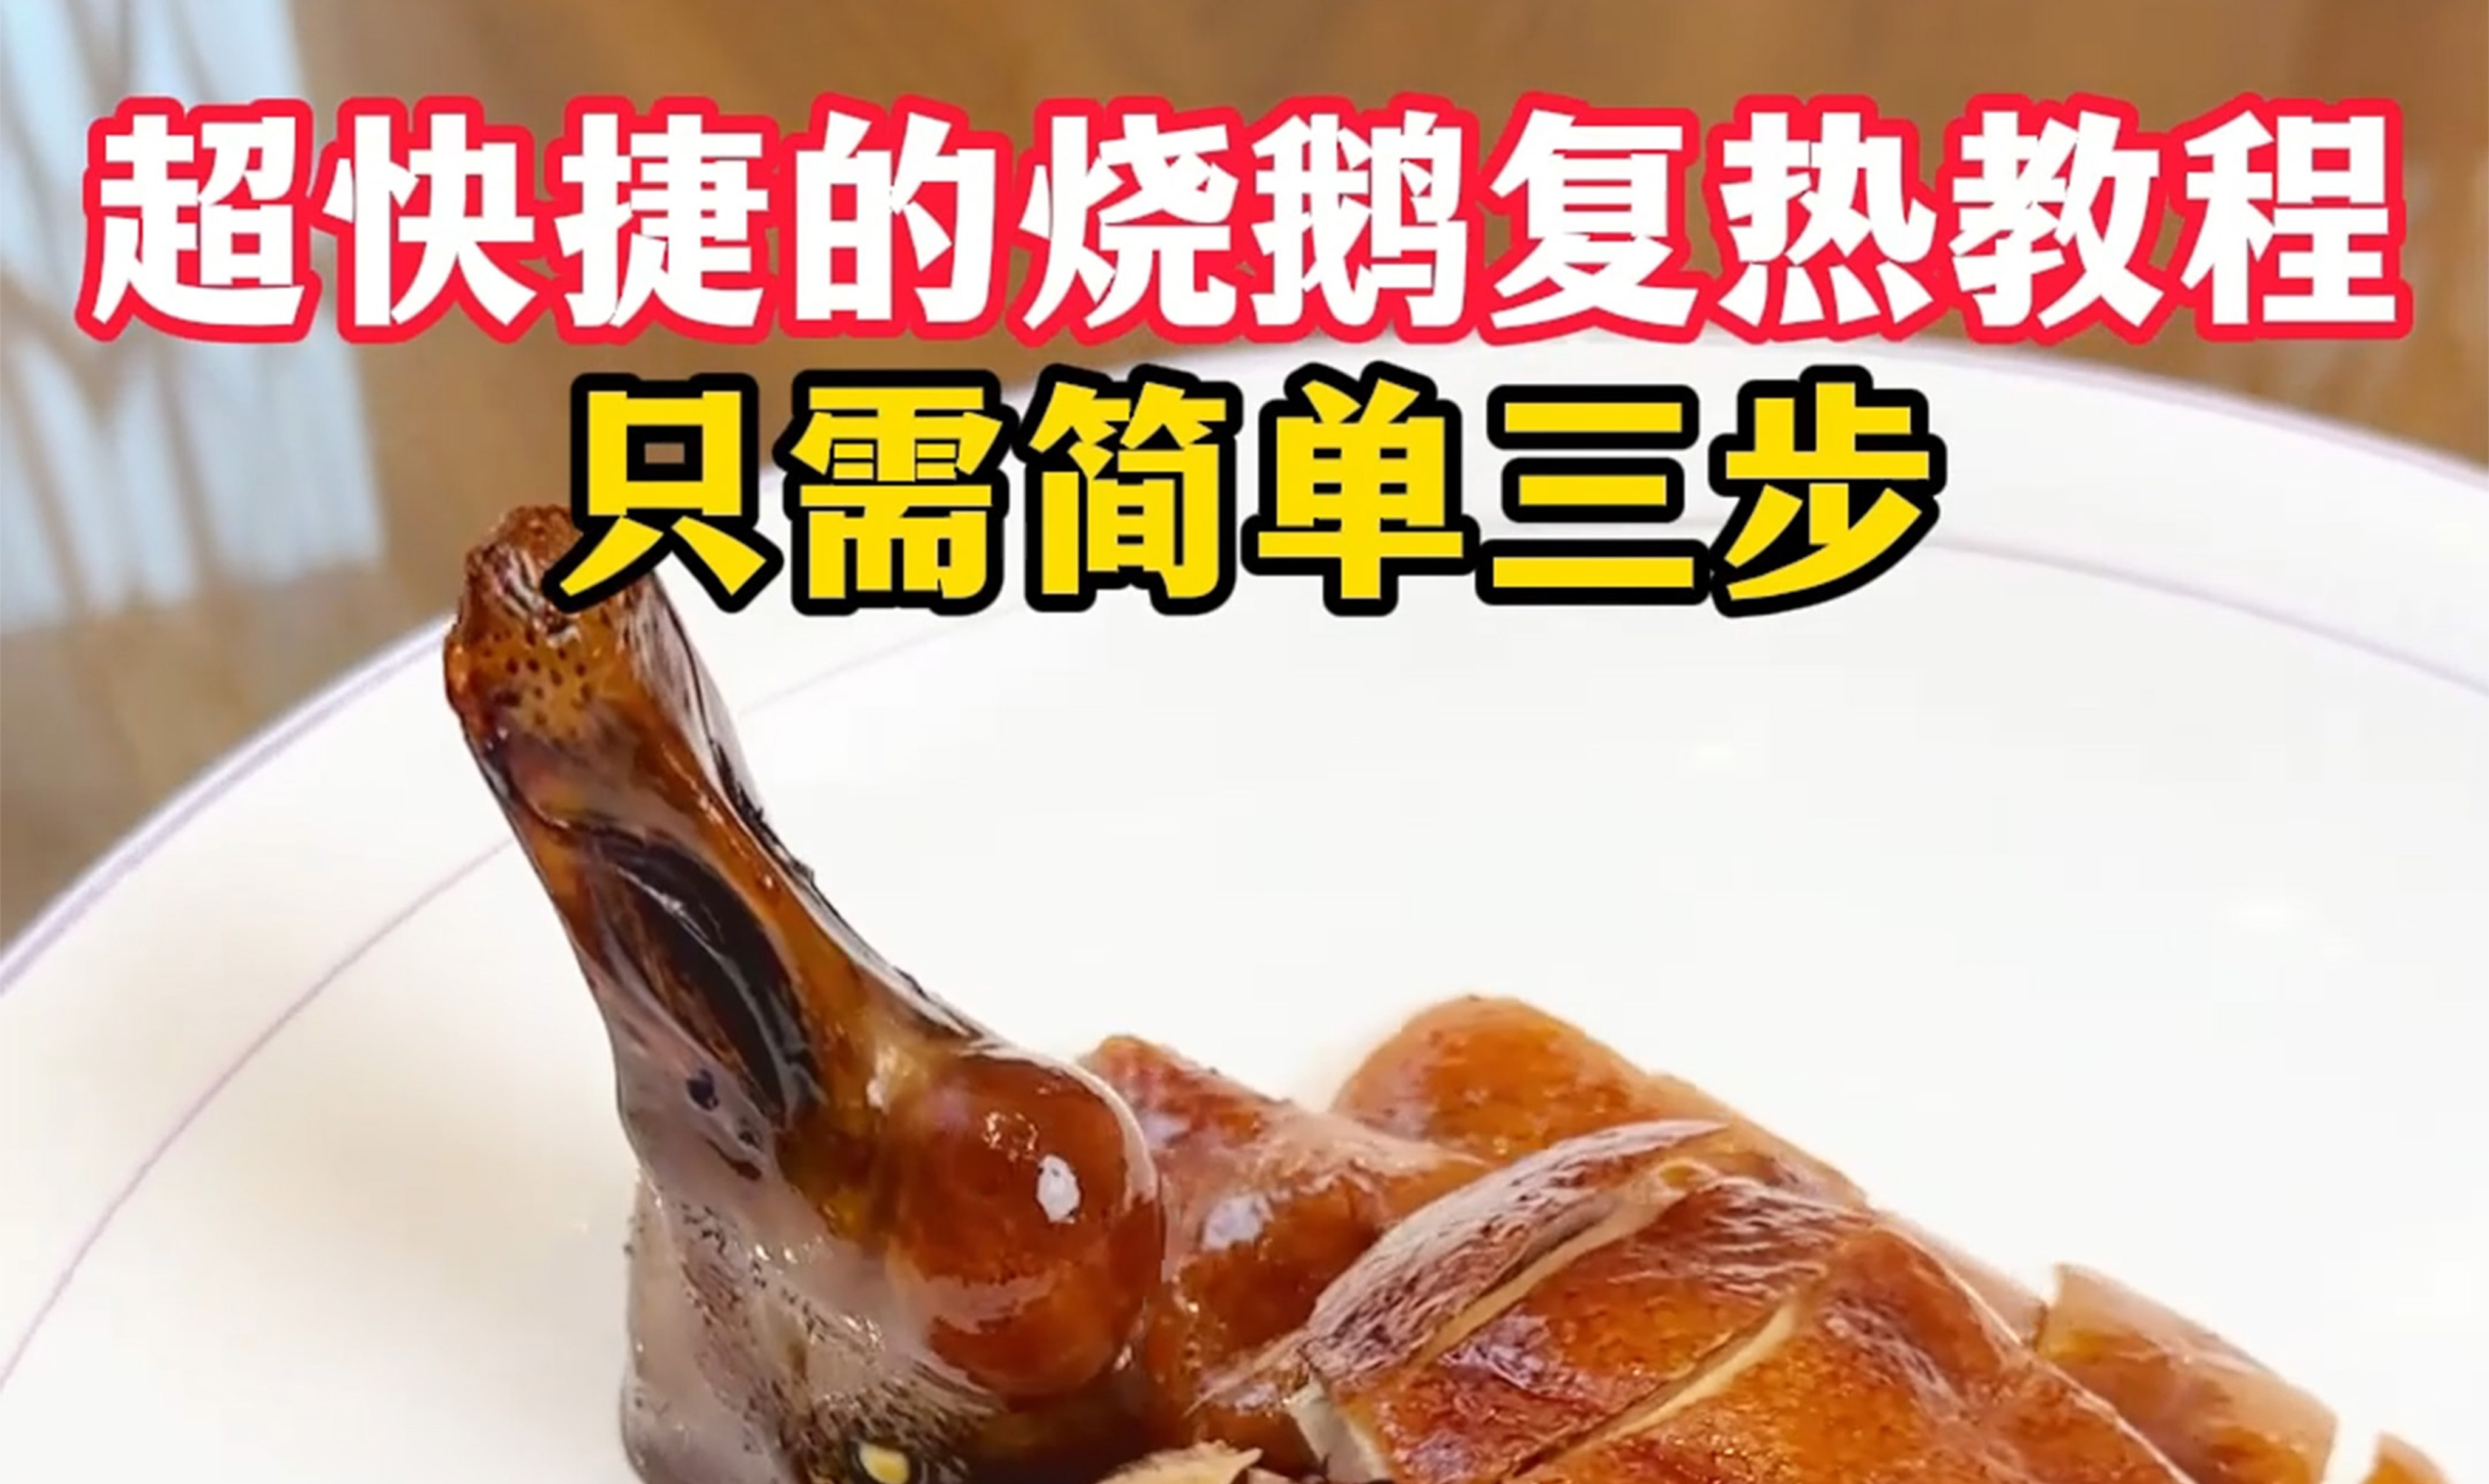 How to Reheat Roast Duck